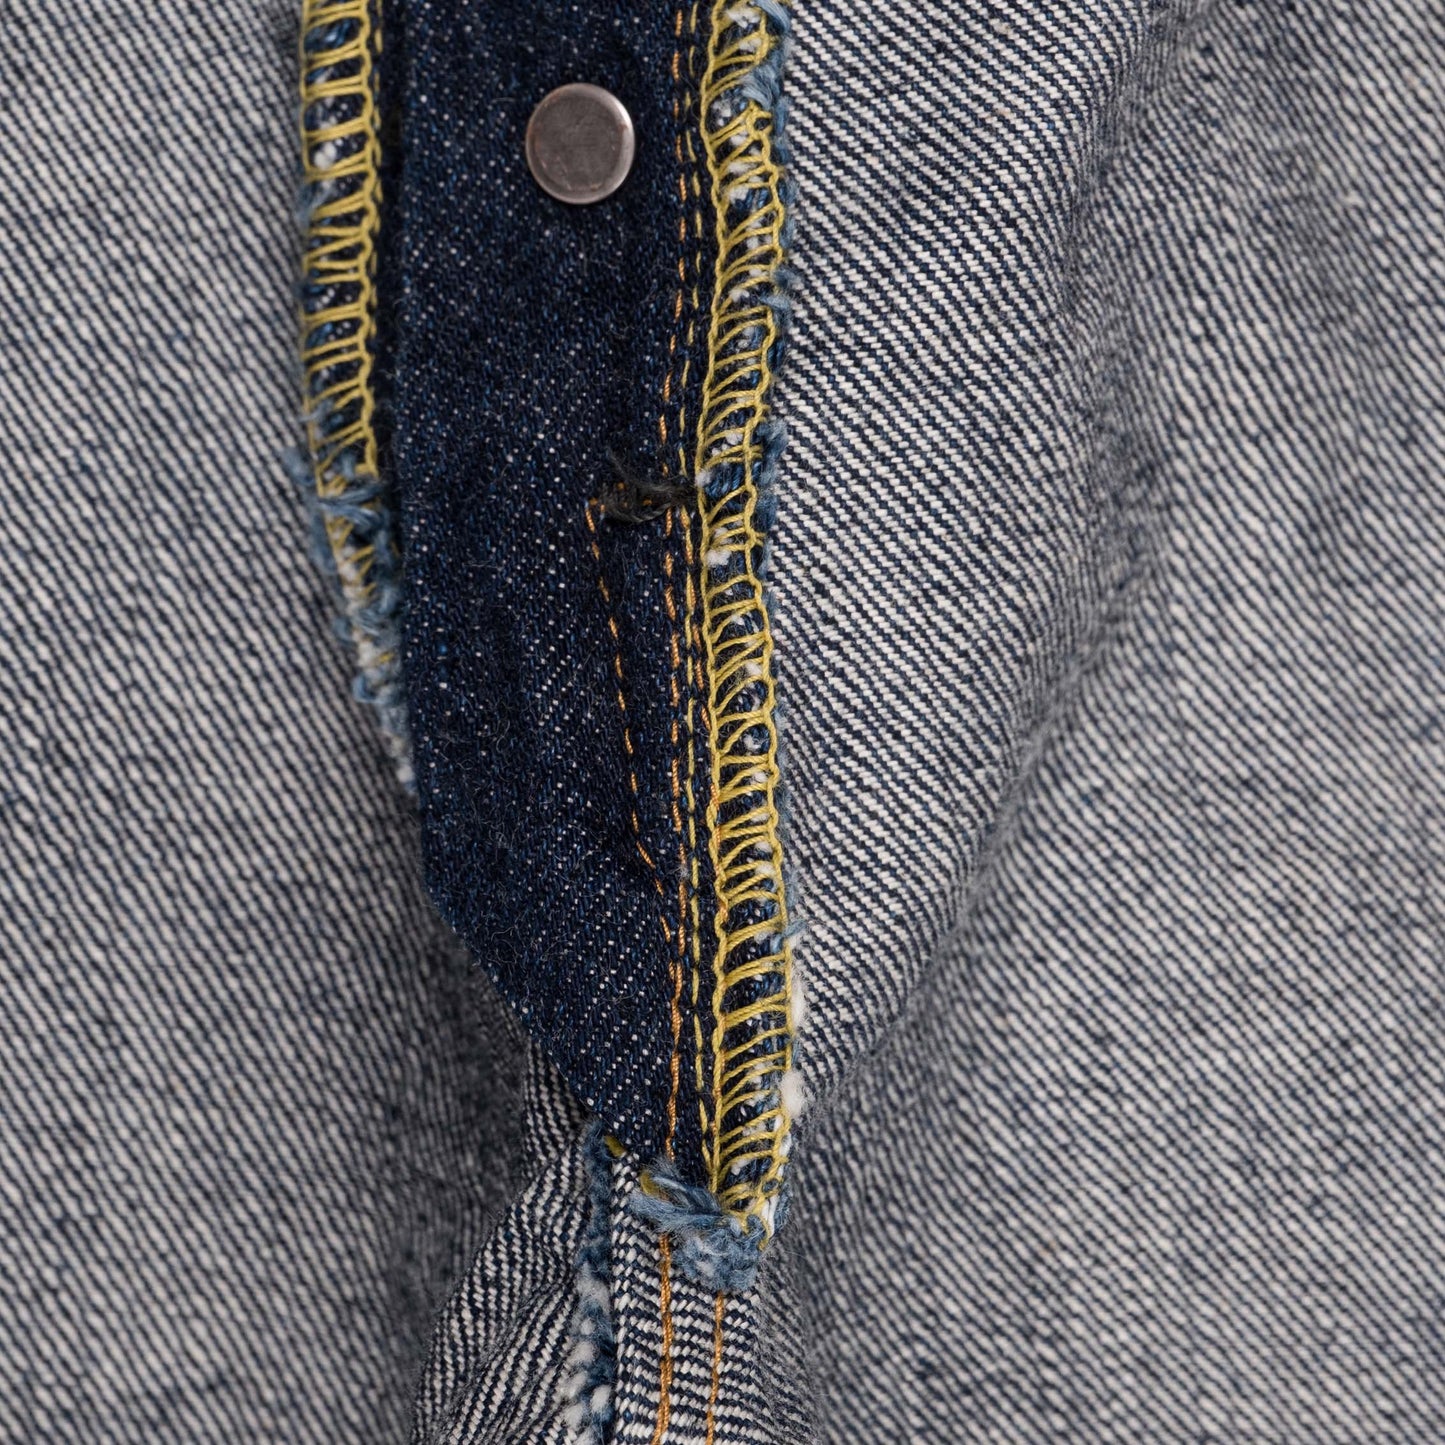 RC 426S 1960s Denim Jeans